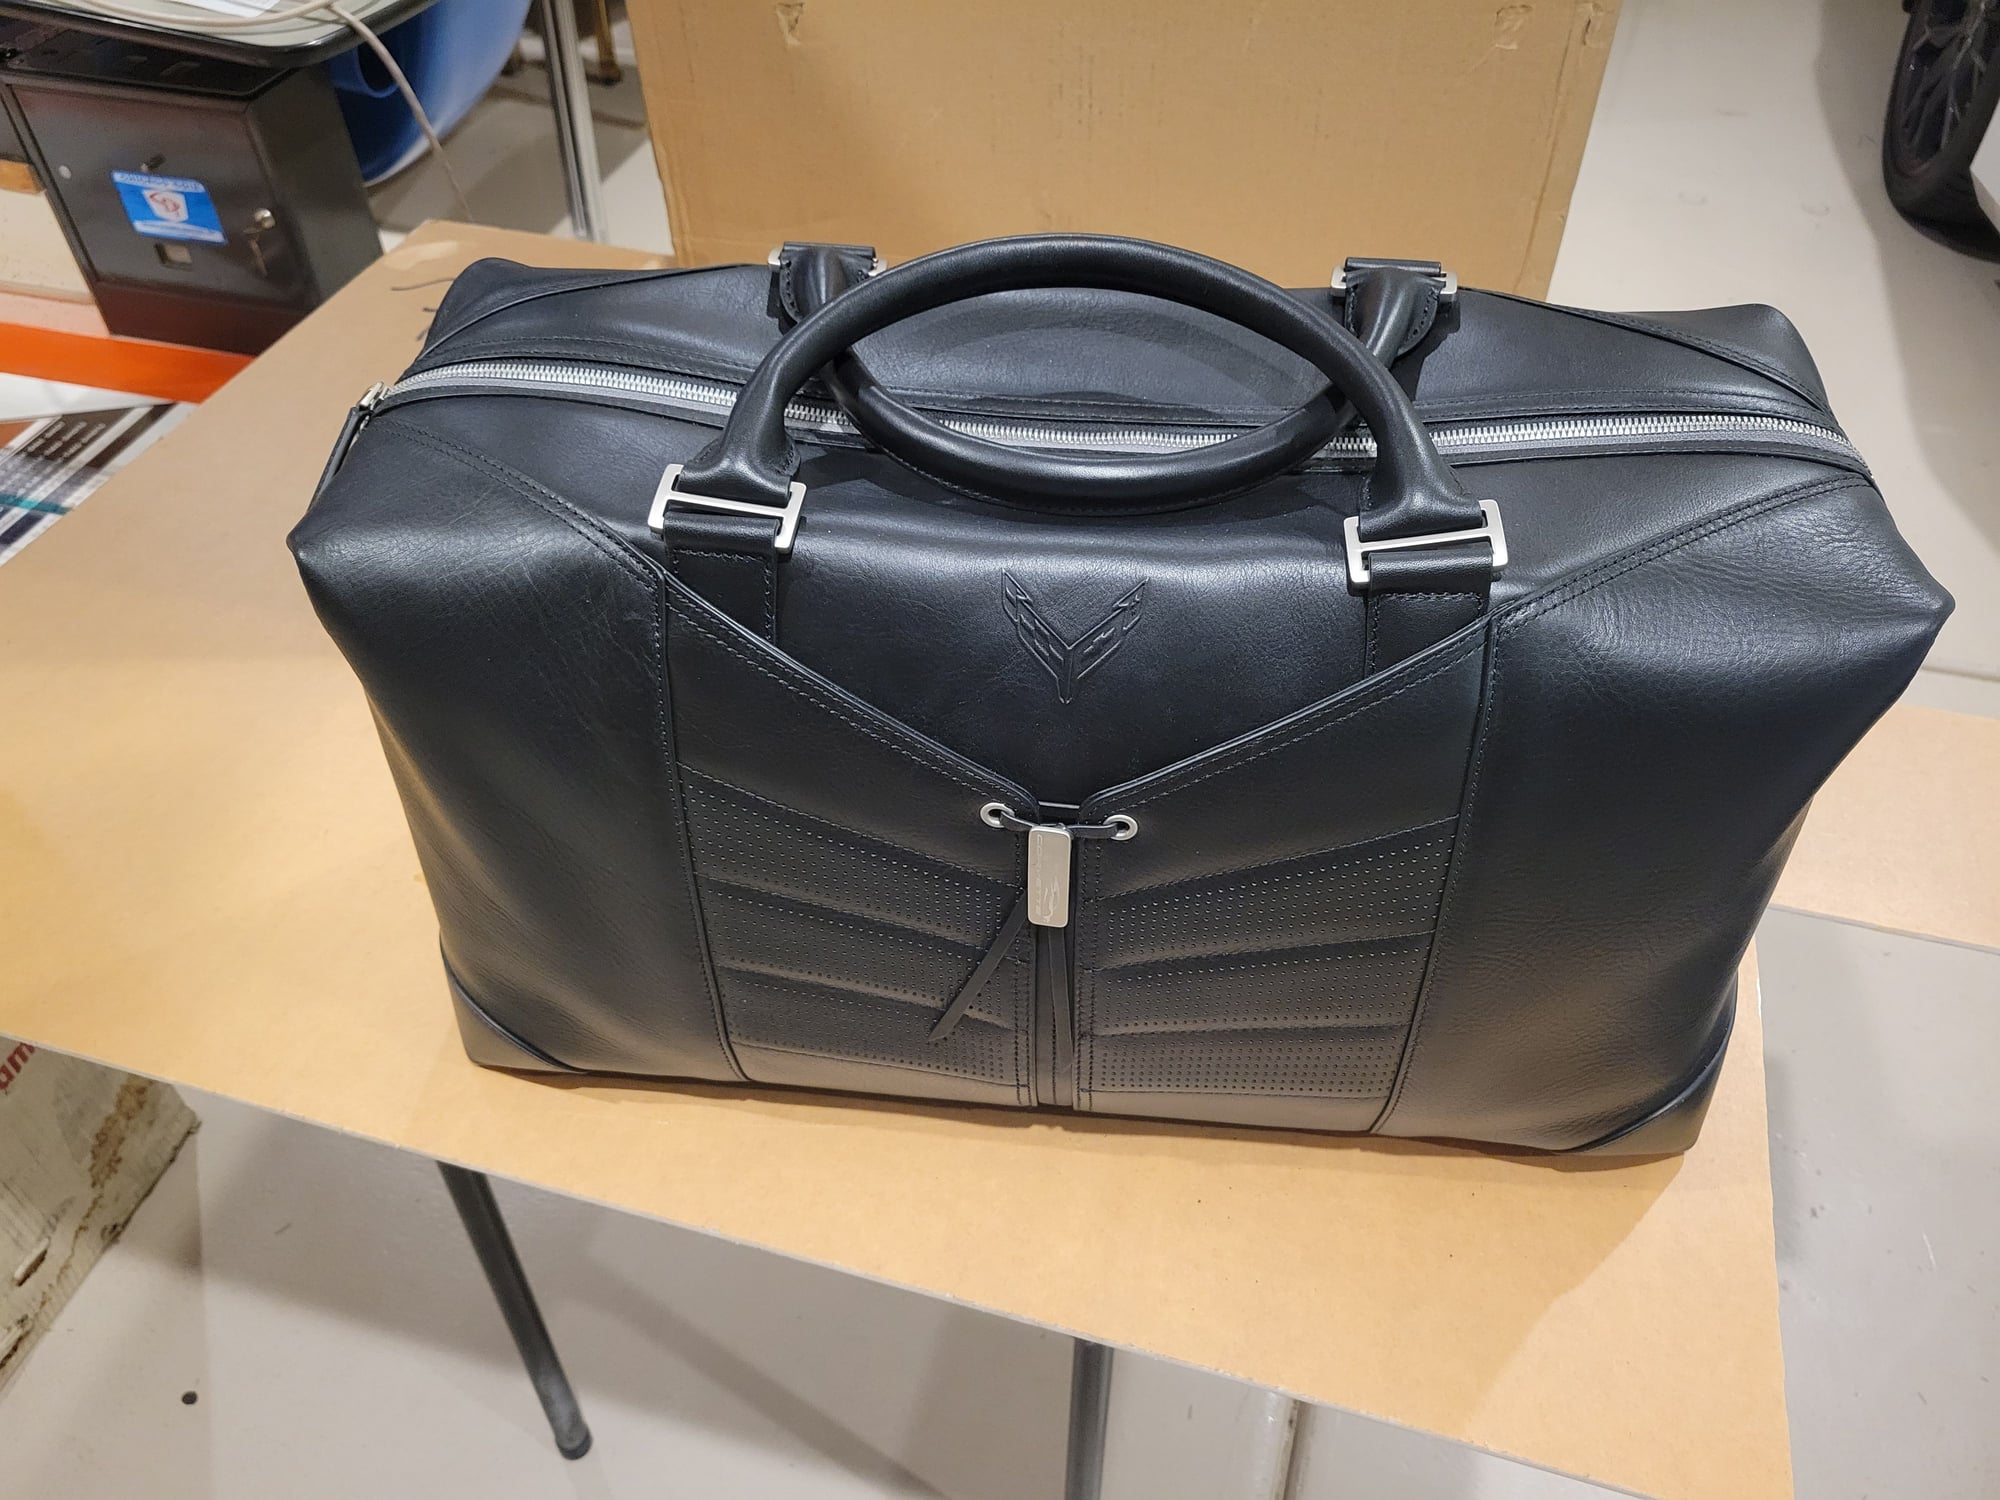 FS (For Sale) New C8 leather travel bags - CorvetteForum - Chevrolet ...